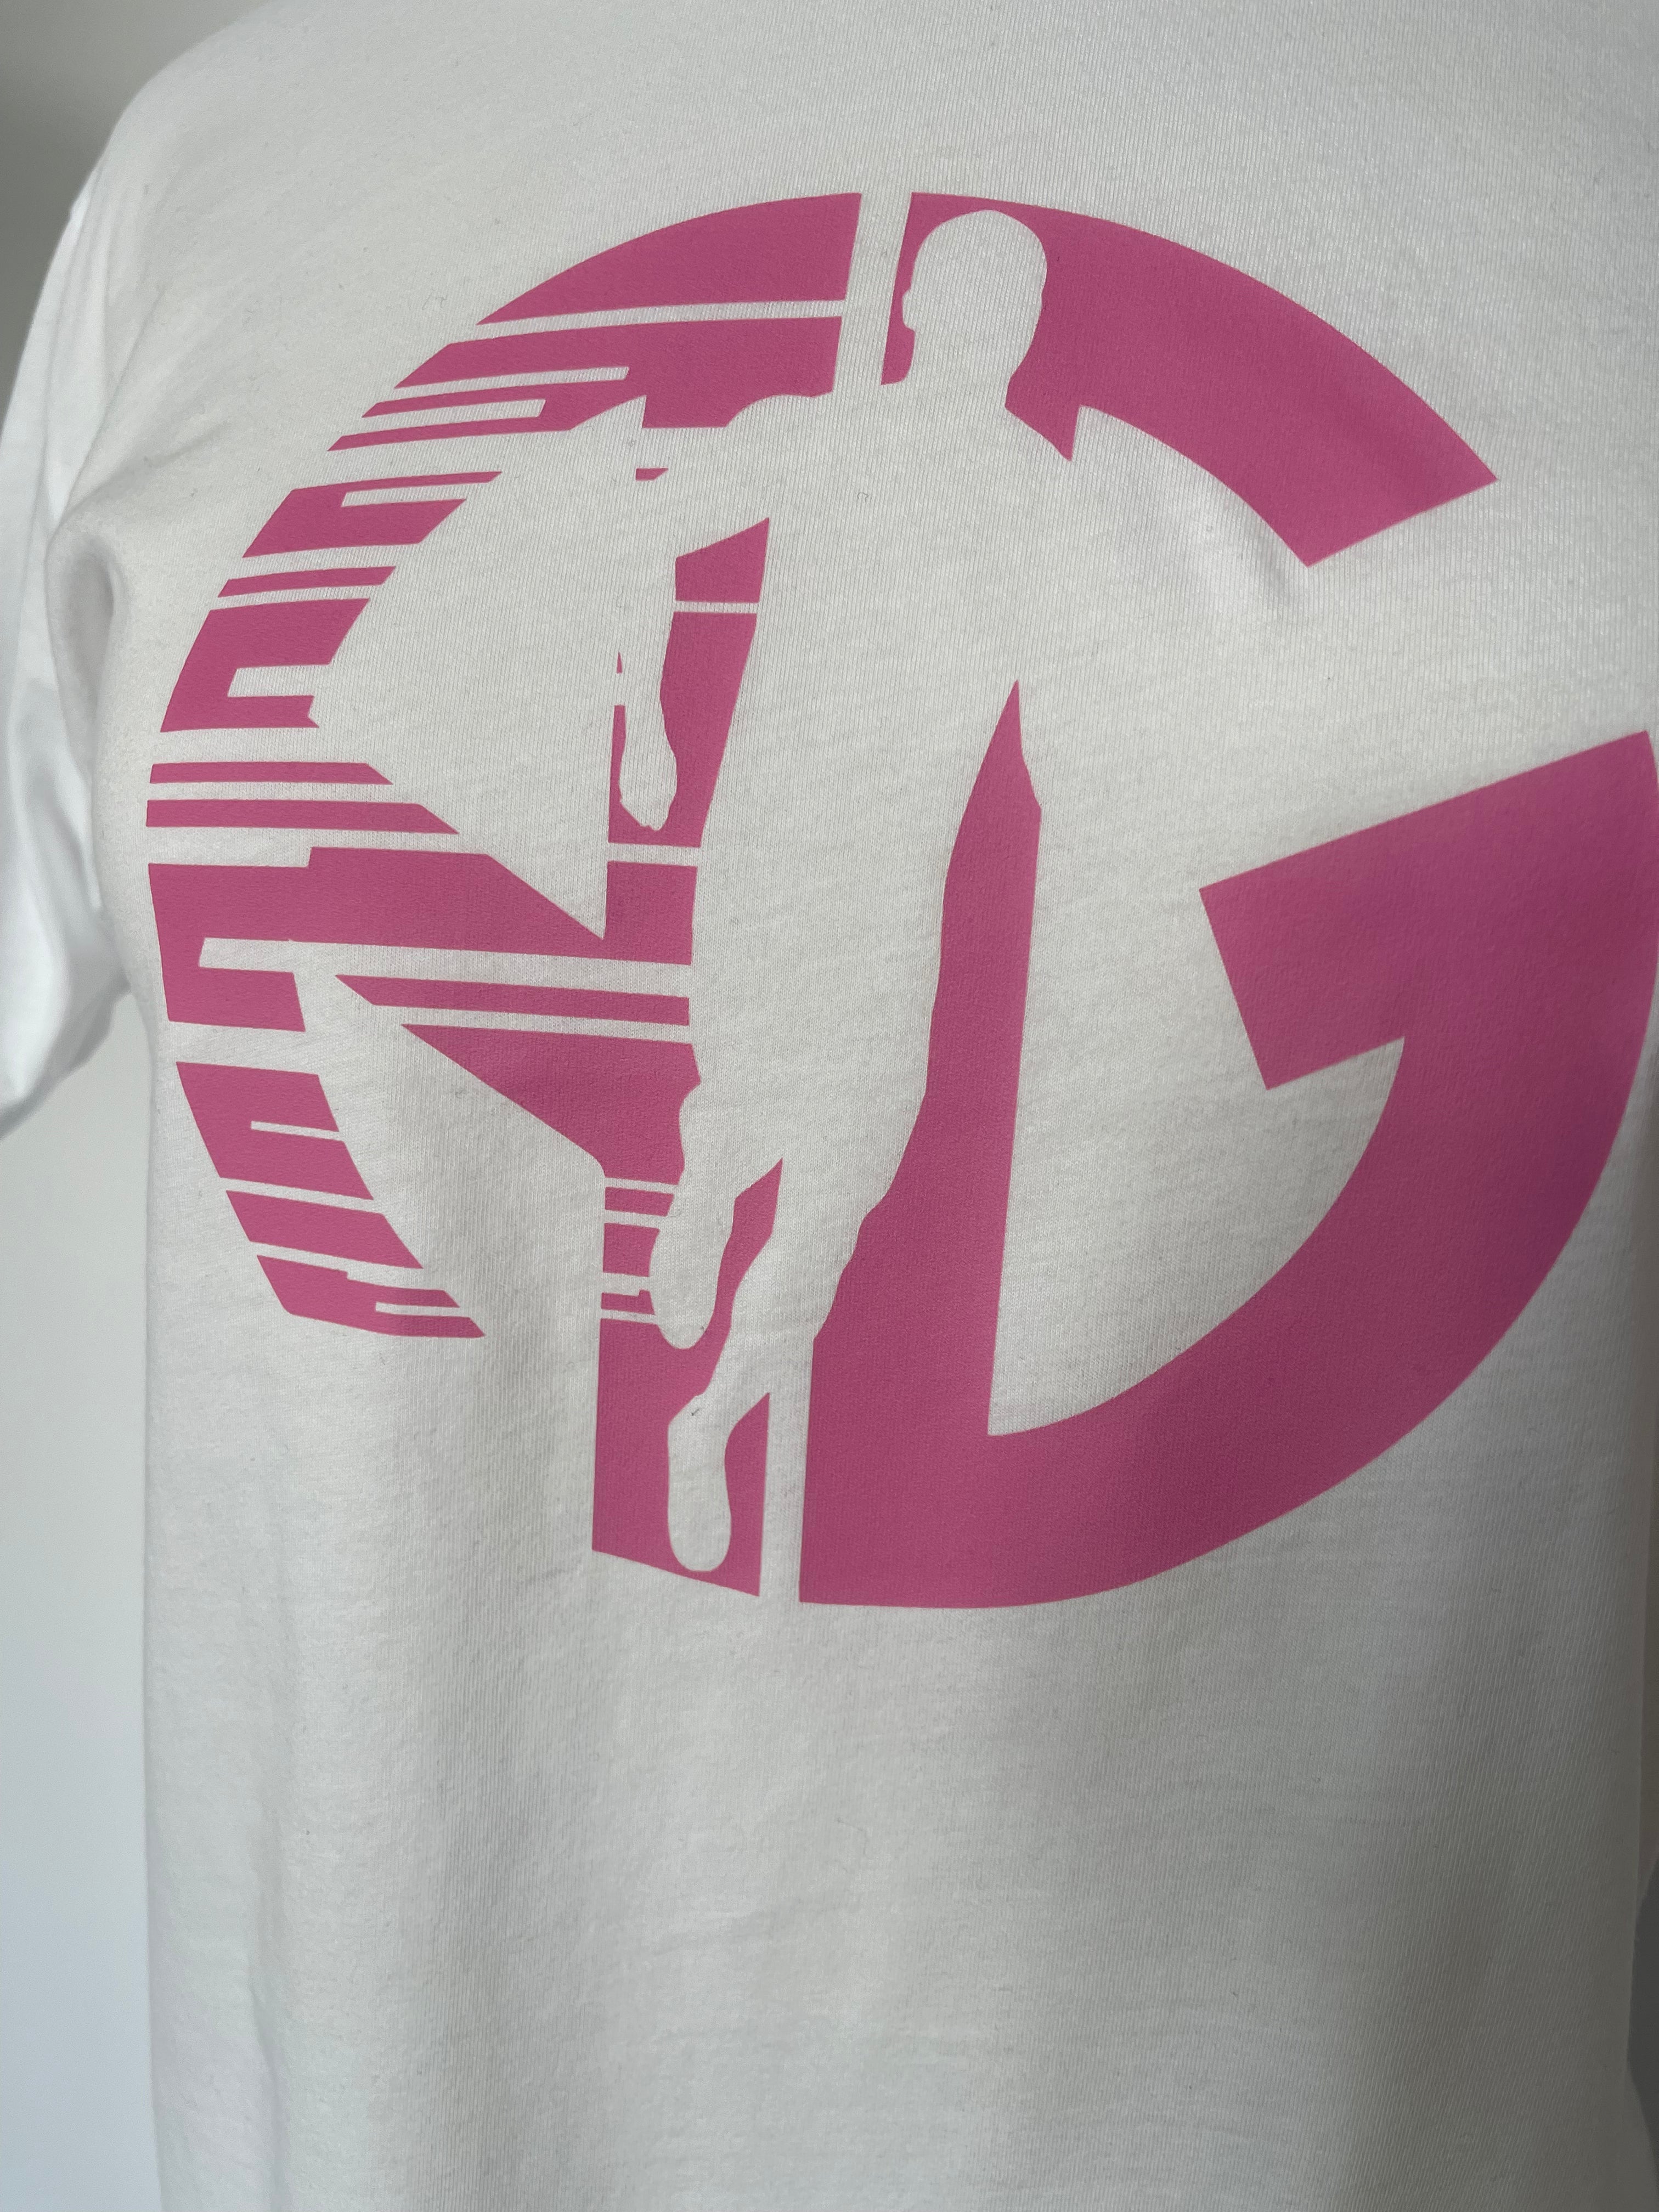 AG Running Man Unisex Tshirt - Tee - white - Pink AG - Black - Peach AG - cotton - lightweight - short sleeve